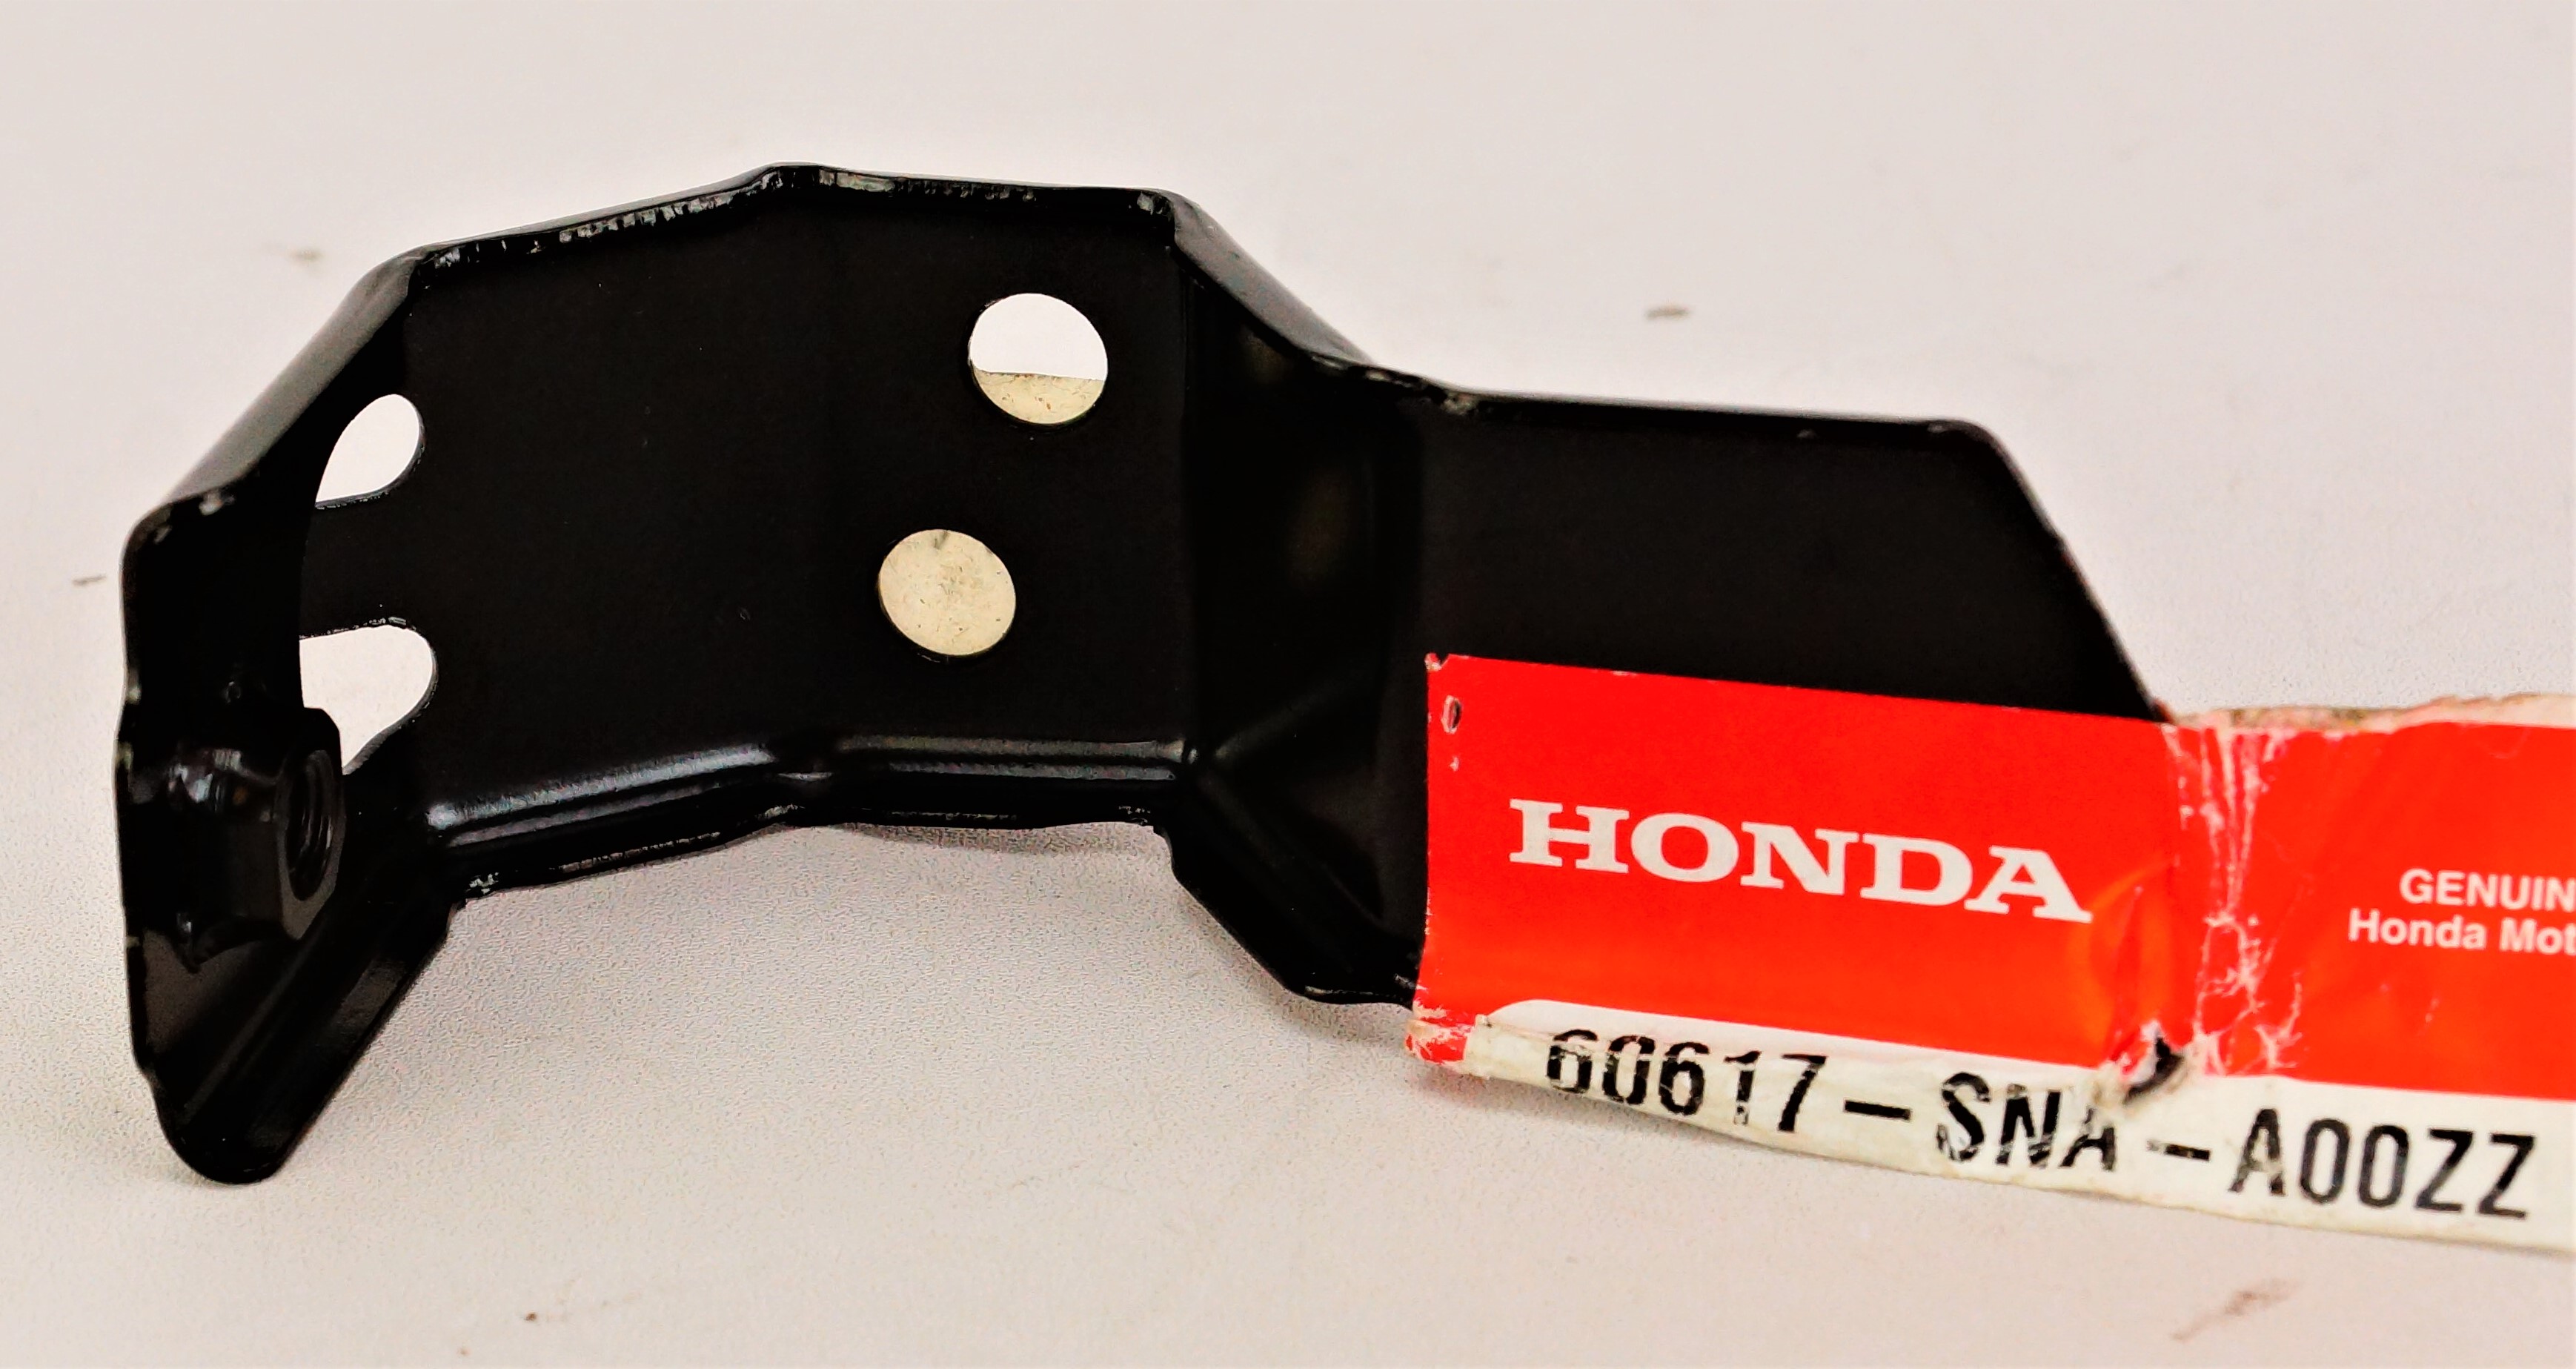 Genuine OEM 60617-sna-a00zz Honda Right Front Fender Bracket 2006-11 Civic - image 1